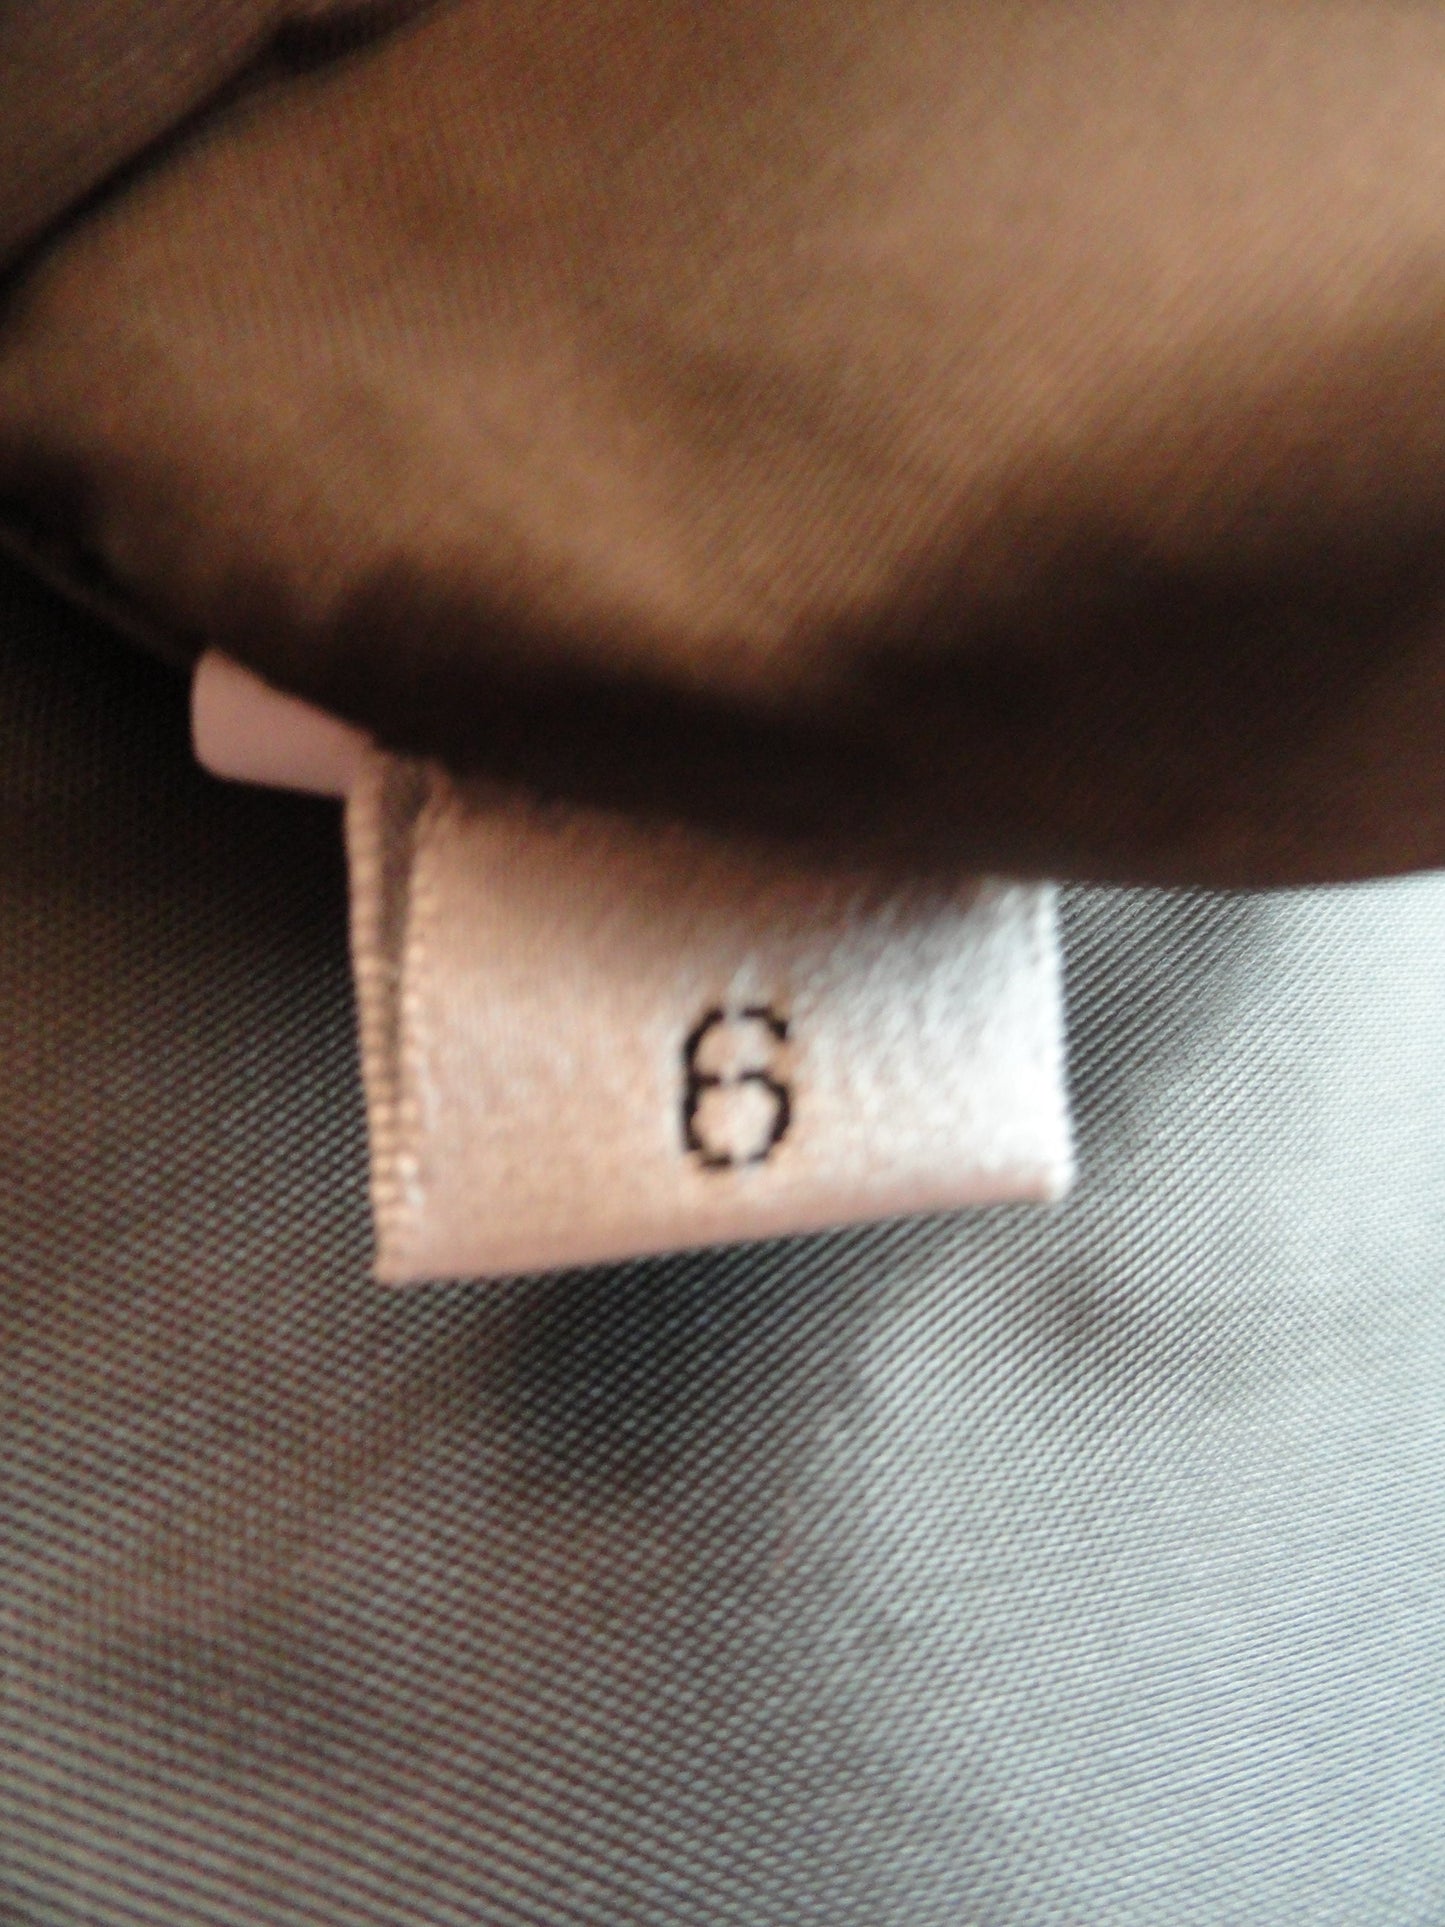 Kay Unger 80's Skirt Genuine Leather Brown Sz 6 SKU 000018